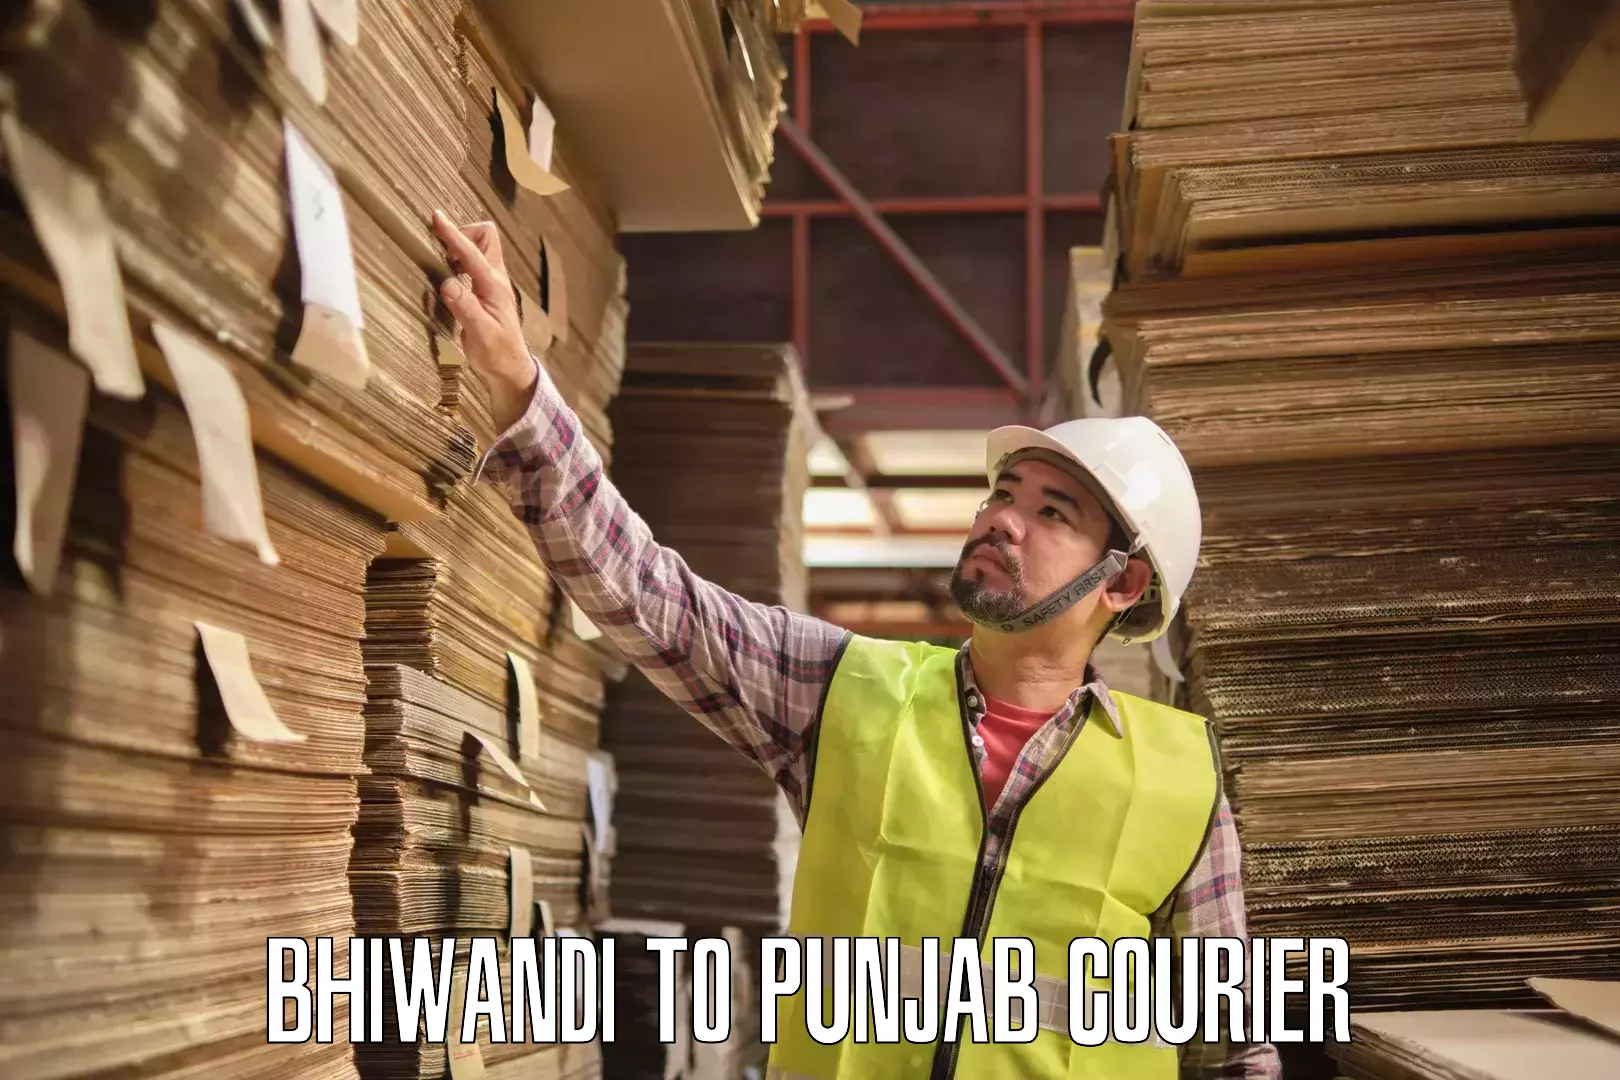 International courier networks Bhiwandi to Punjab